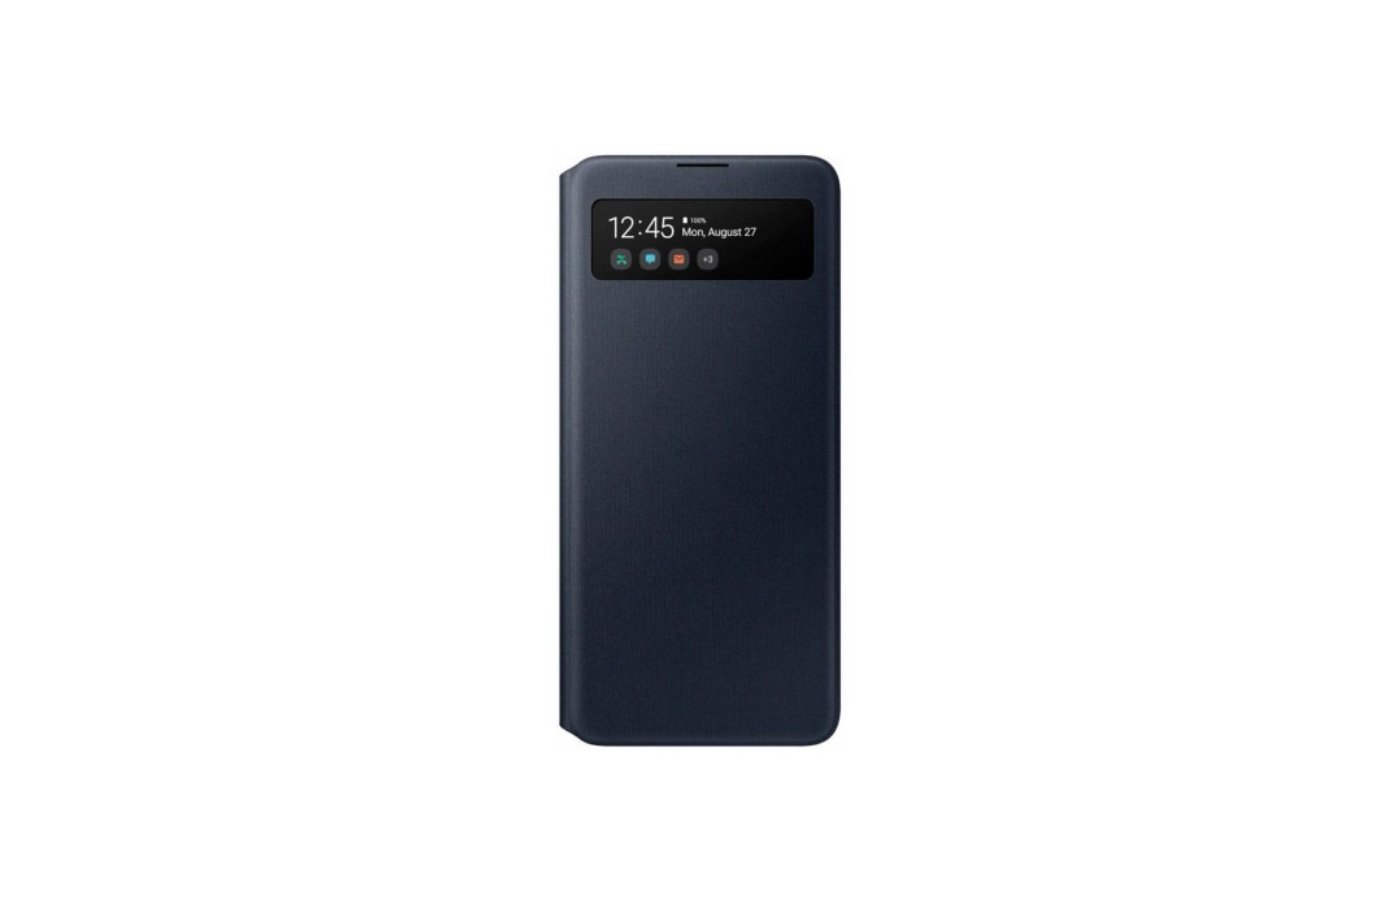 Samsung A51 Black